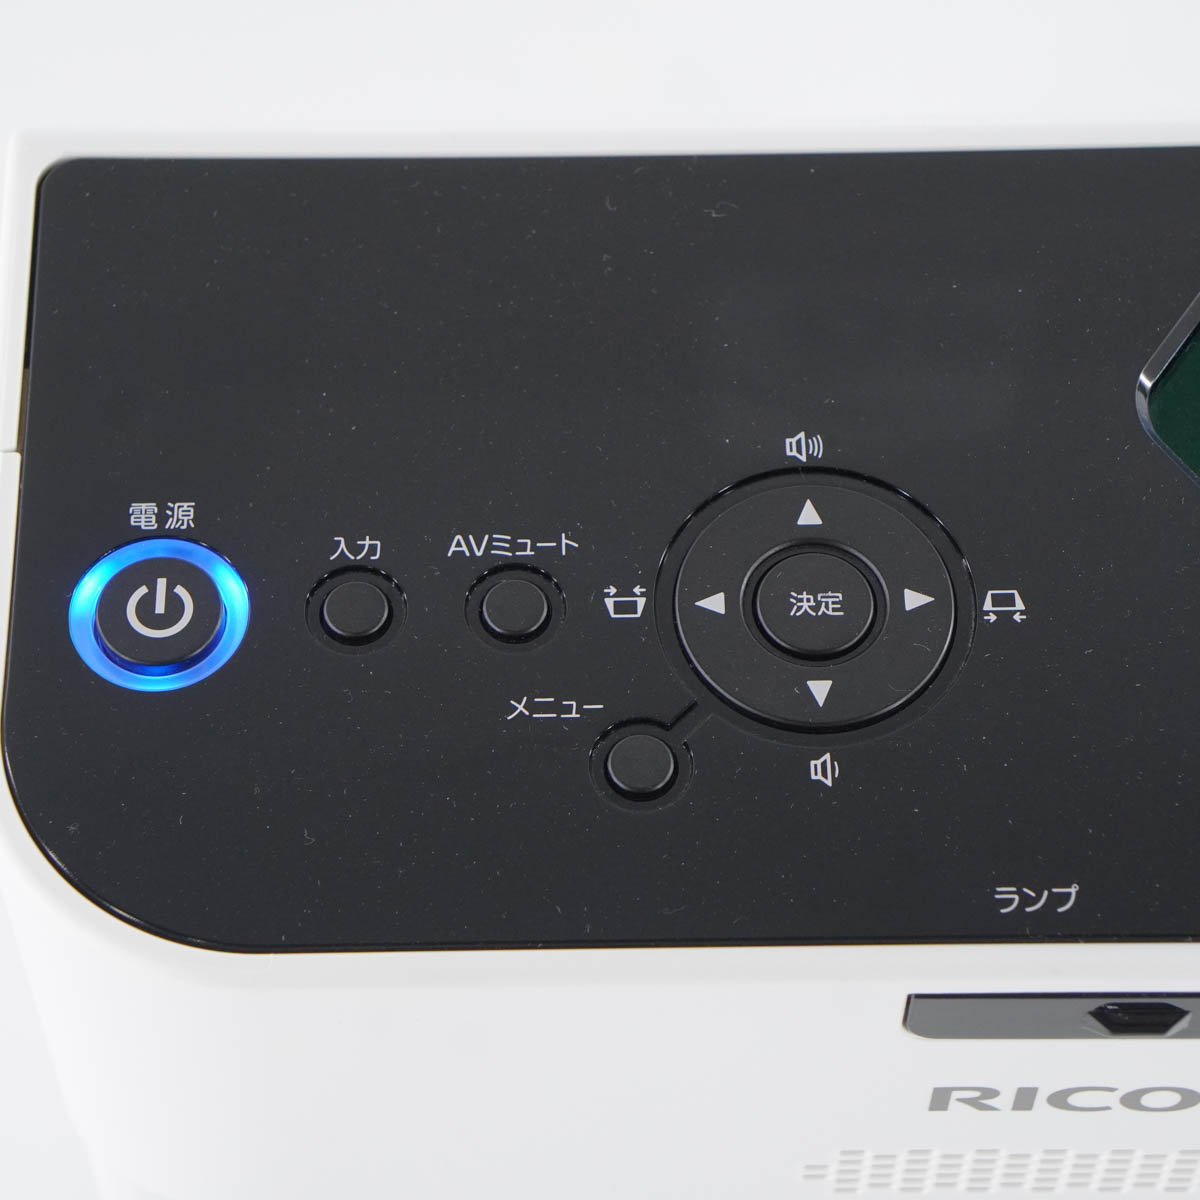 RICOH 超単焦点プロジェクター PJ WX4141N - プロジェクター